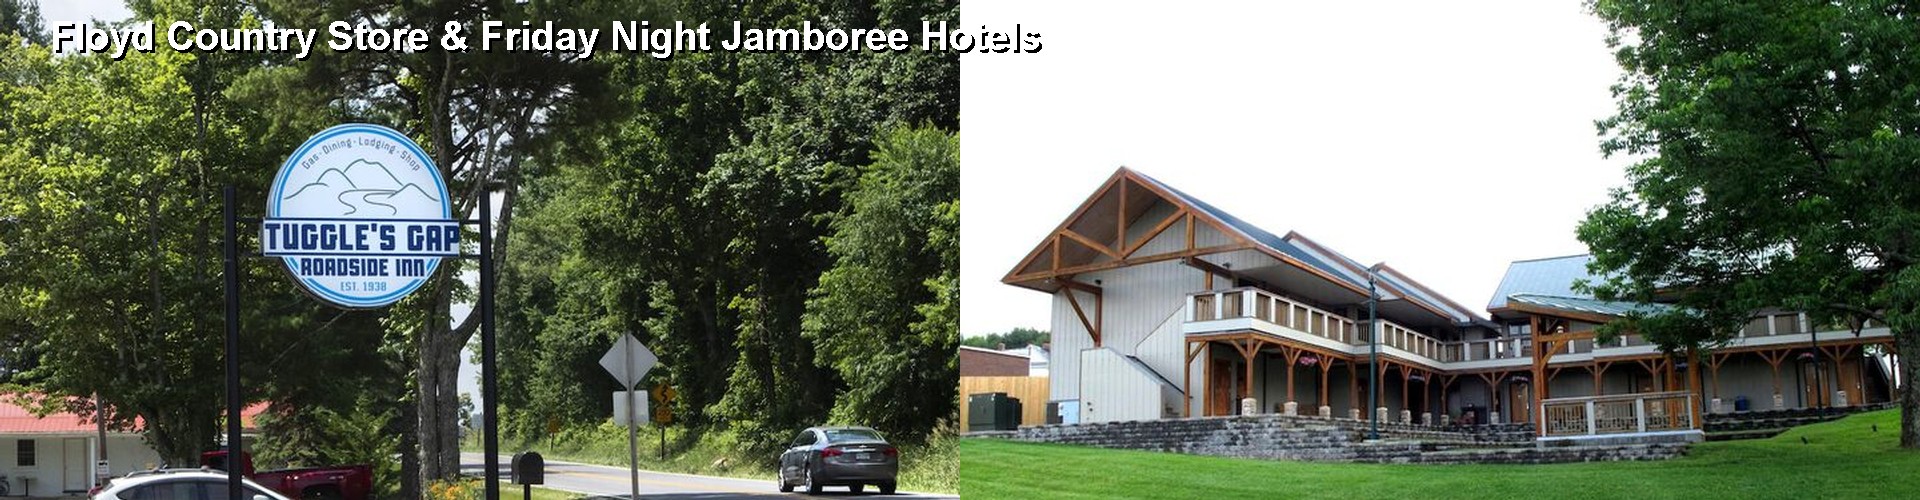 4 Best Hotels near Floyd Country Store & Friday Night Jamboree